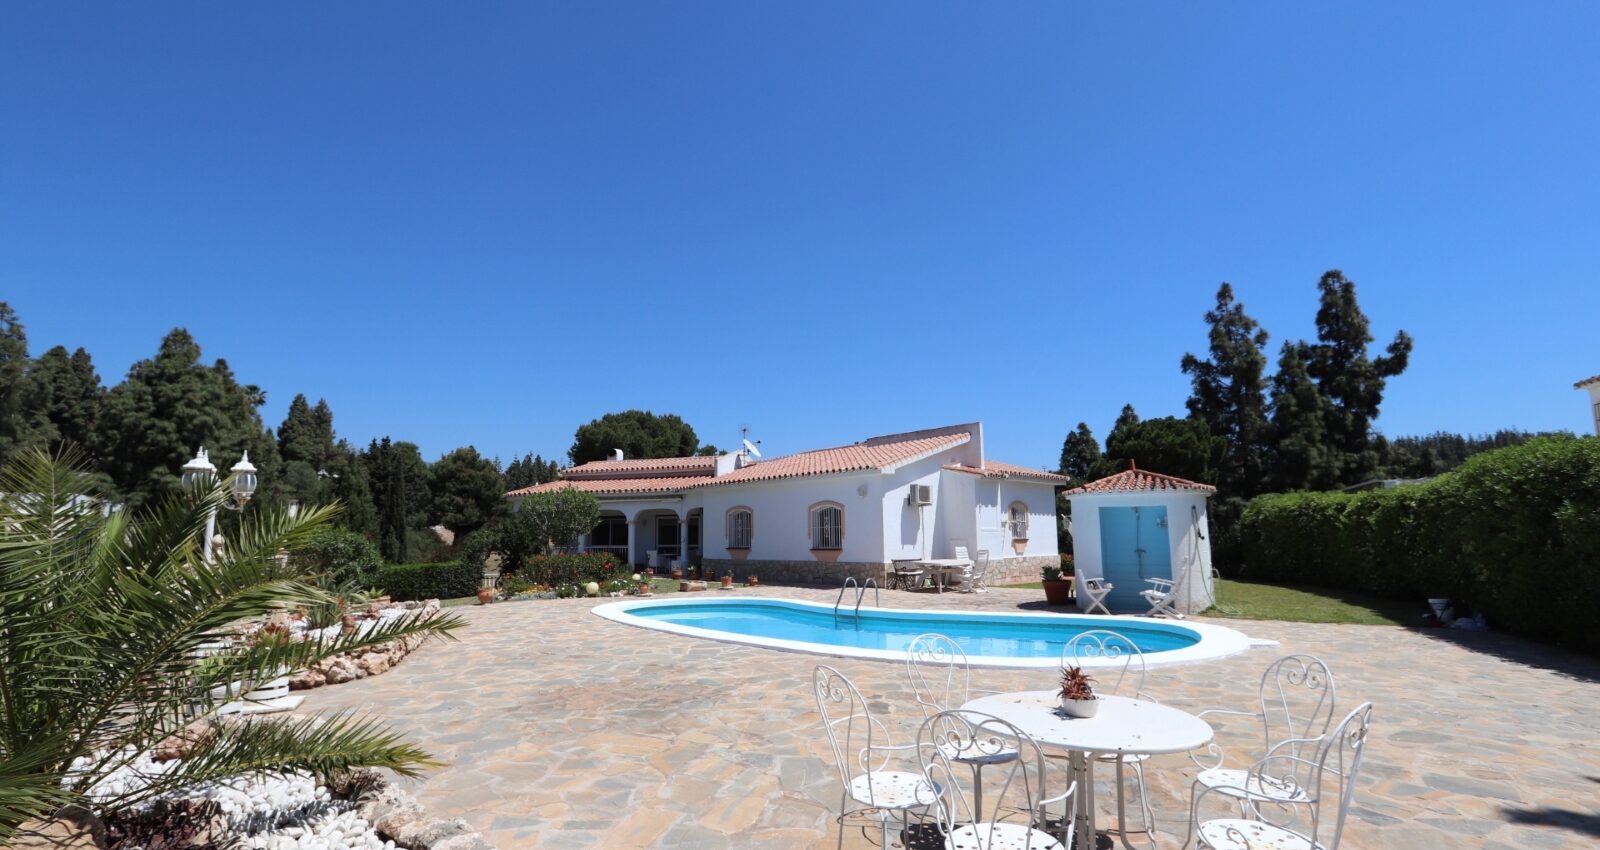 Beautiful traditional Andalusian style villa in Mijas Costa